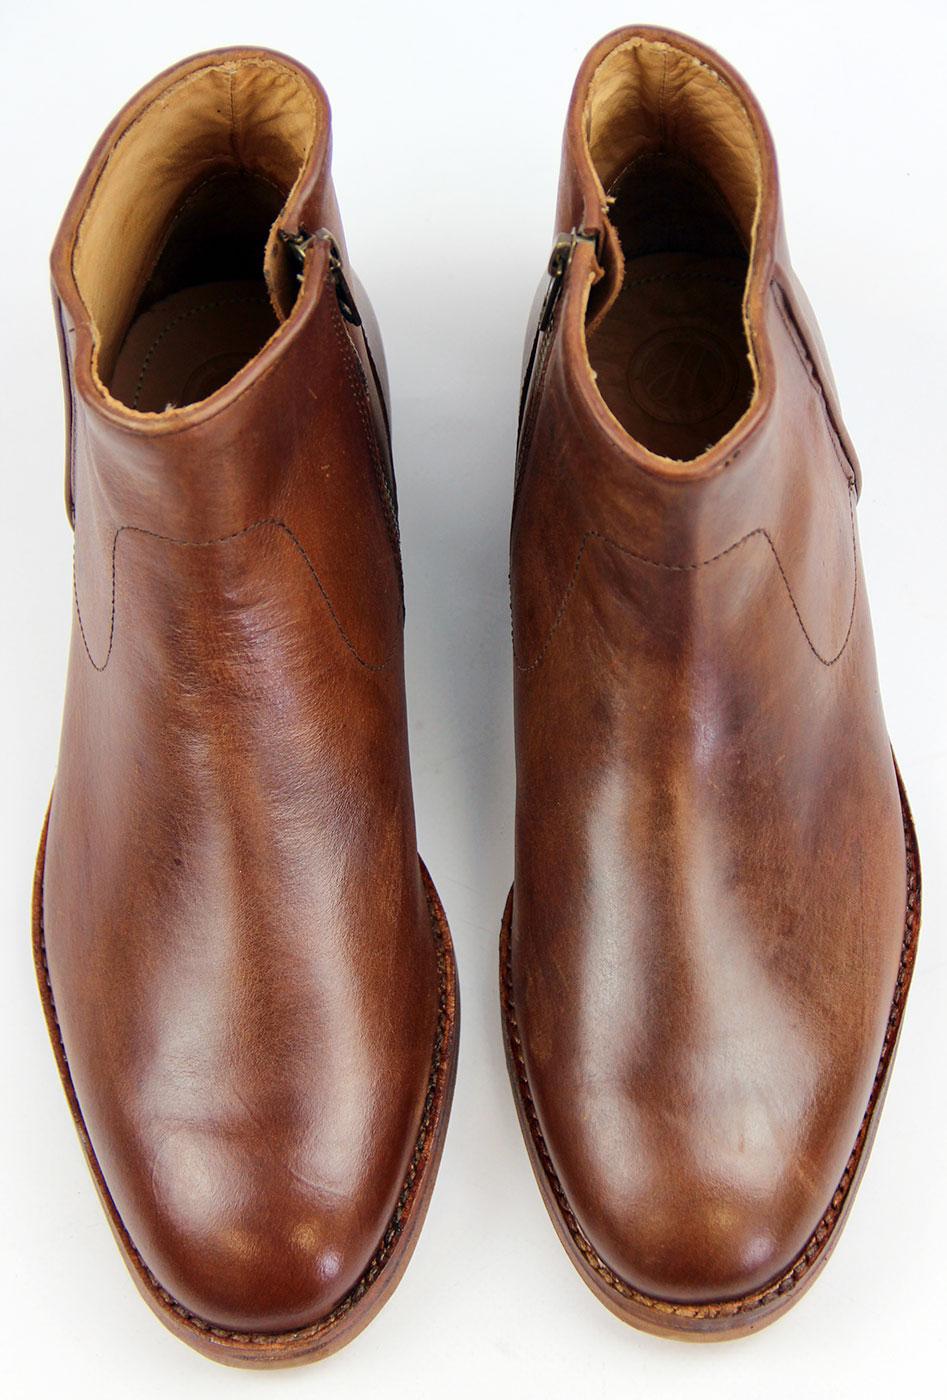 H by HUDSON Hobart Retro 60s Mod Zip Side Dealer Boots in Tan